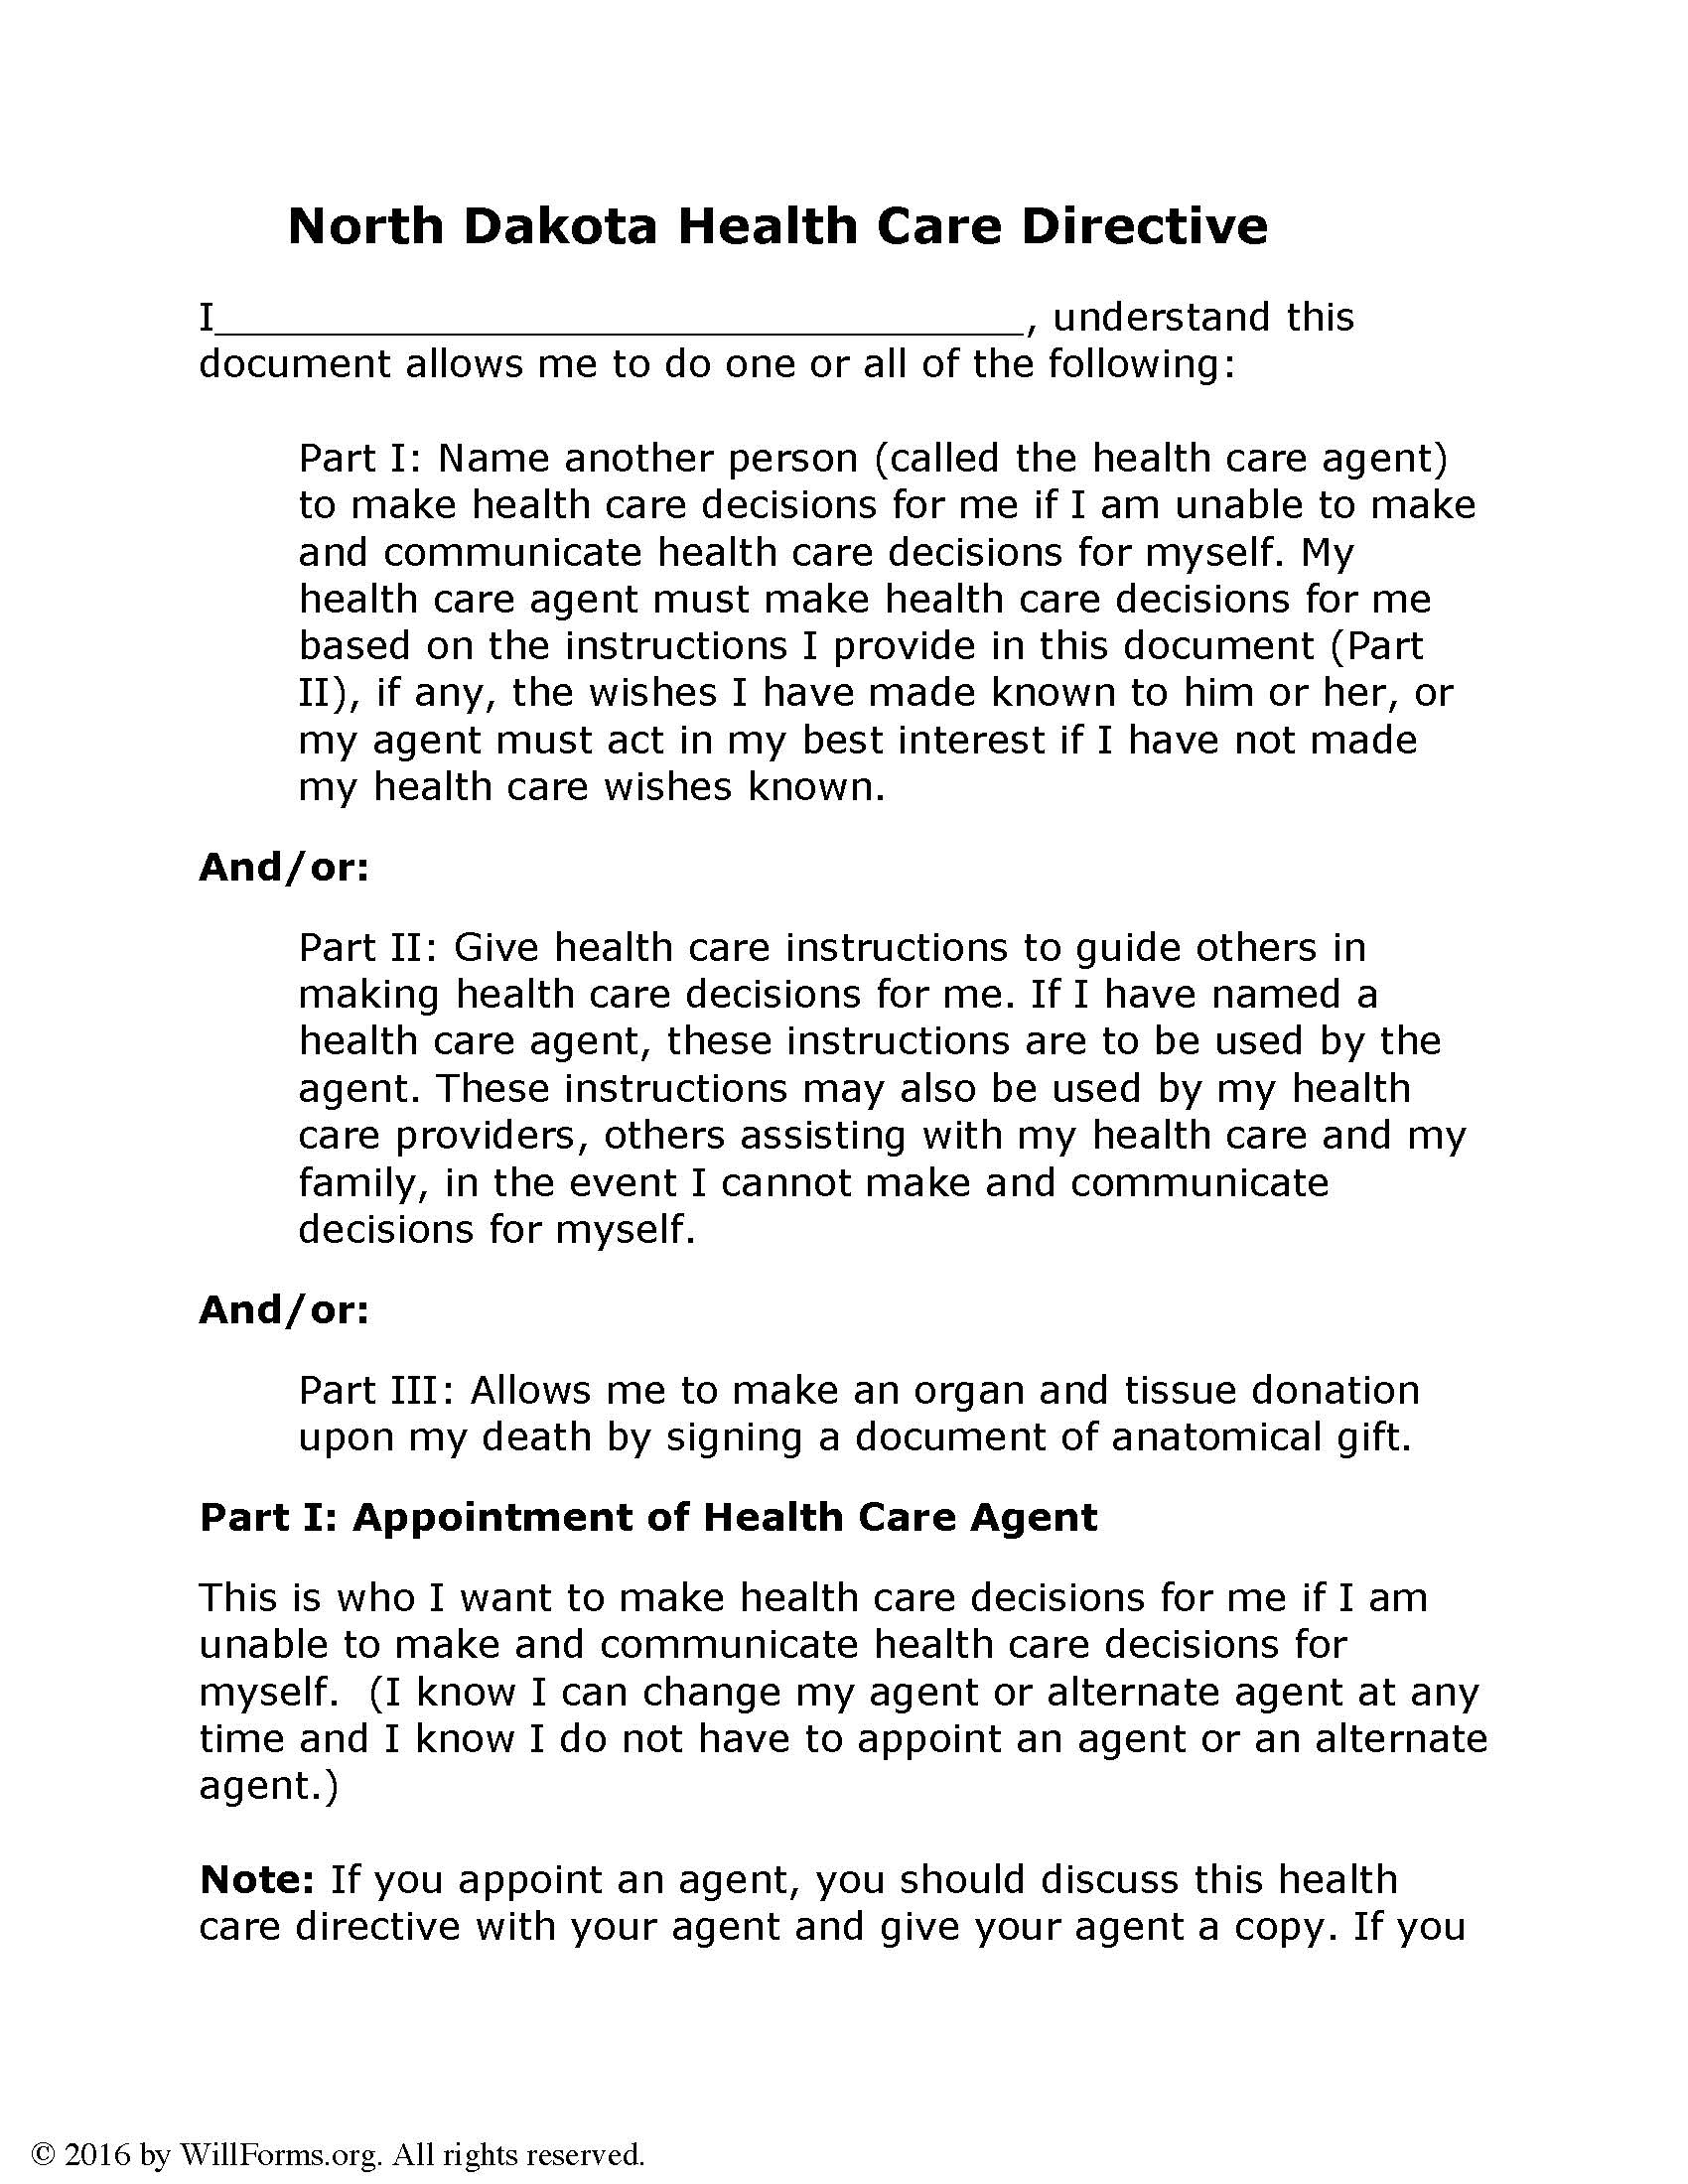 North Dakota Advance Health Care Directive(Living Will) Form